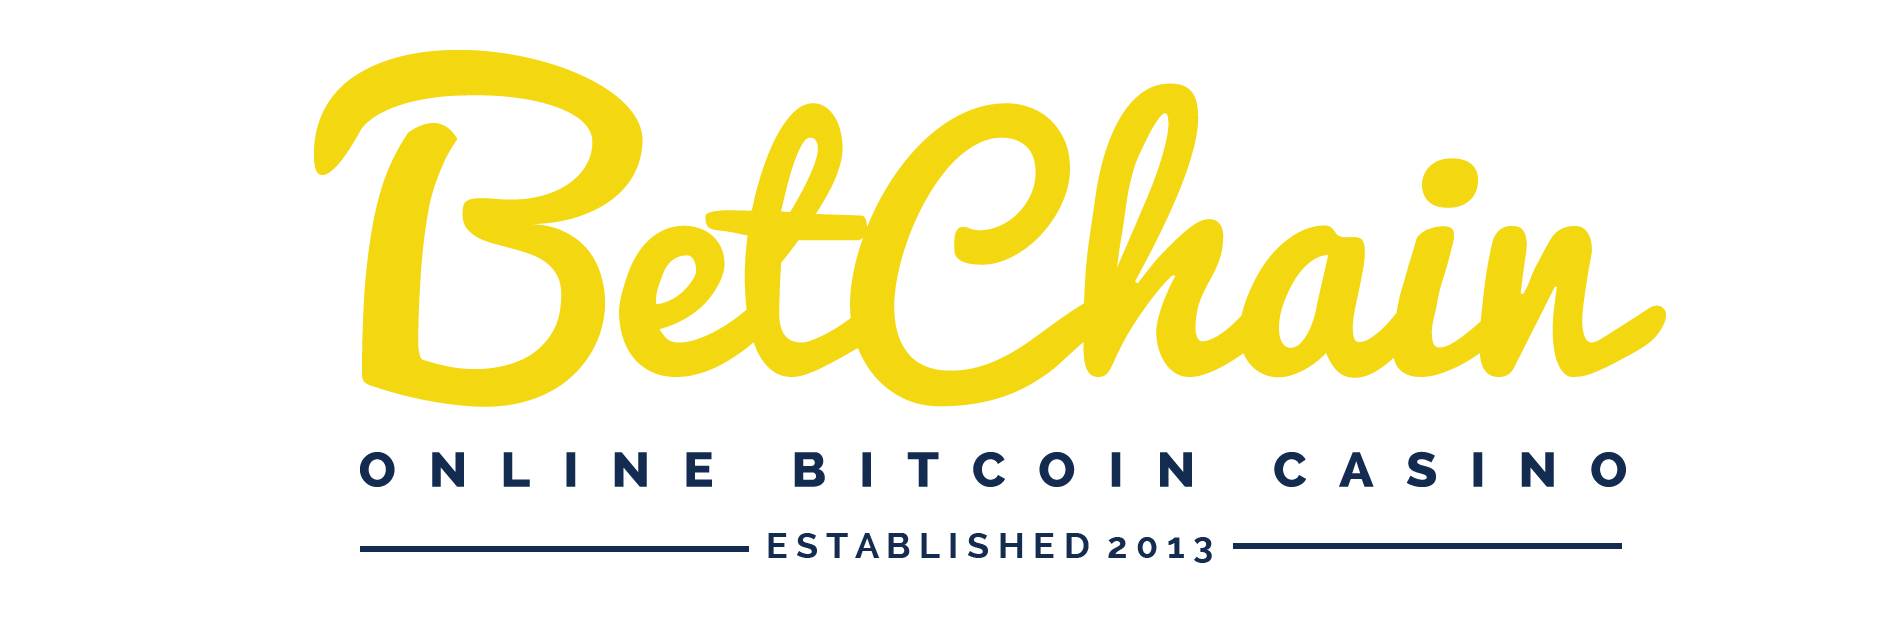 BetChain is a popular Bitcoin and alt coin gambling destination